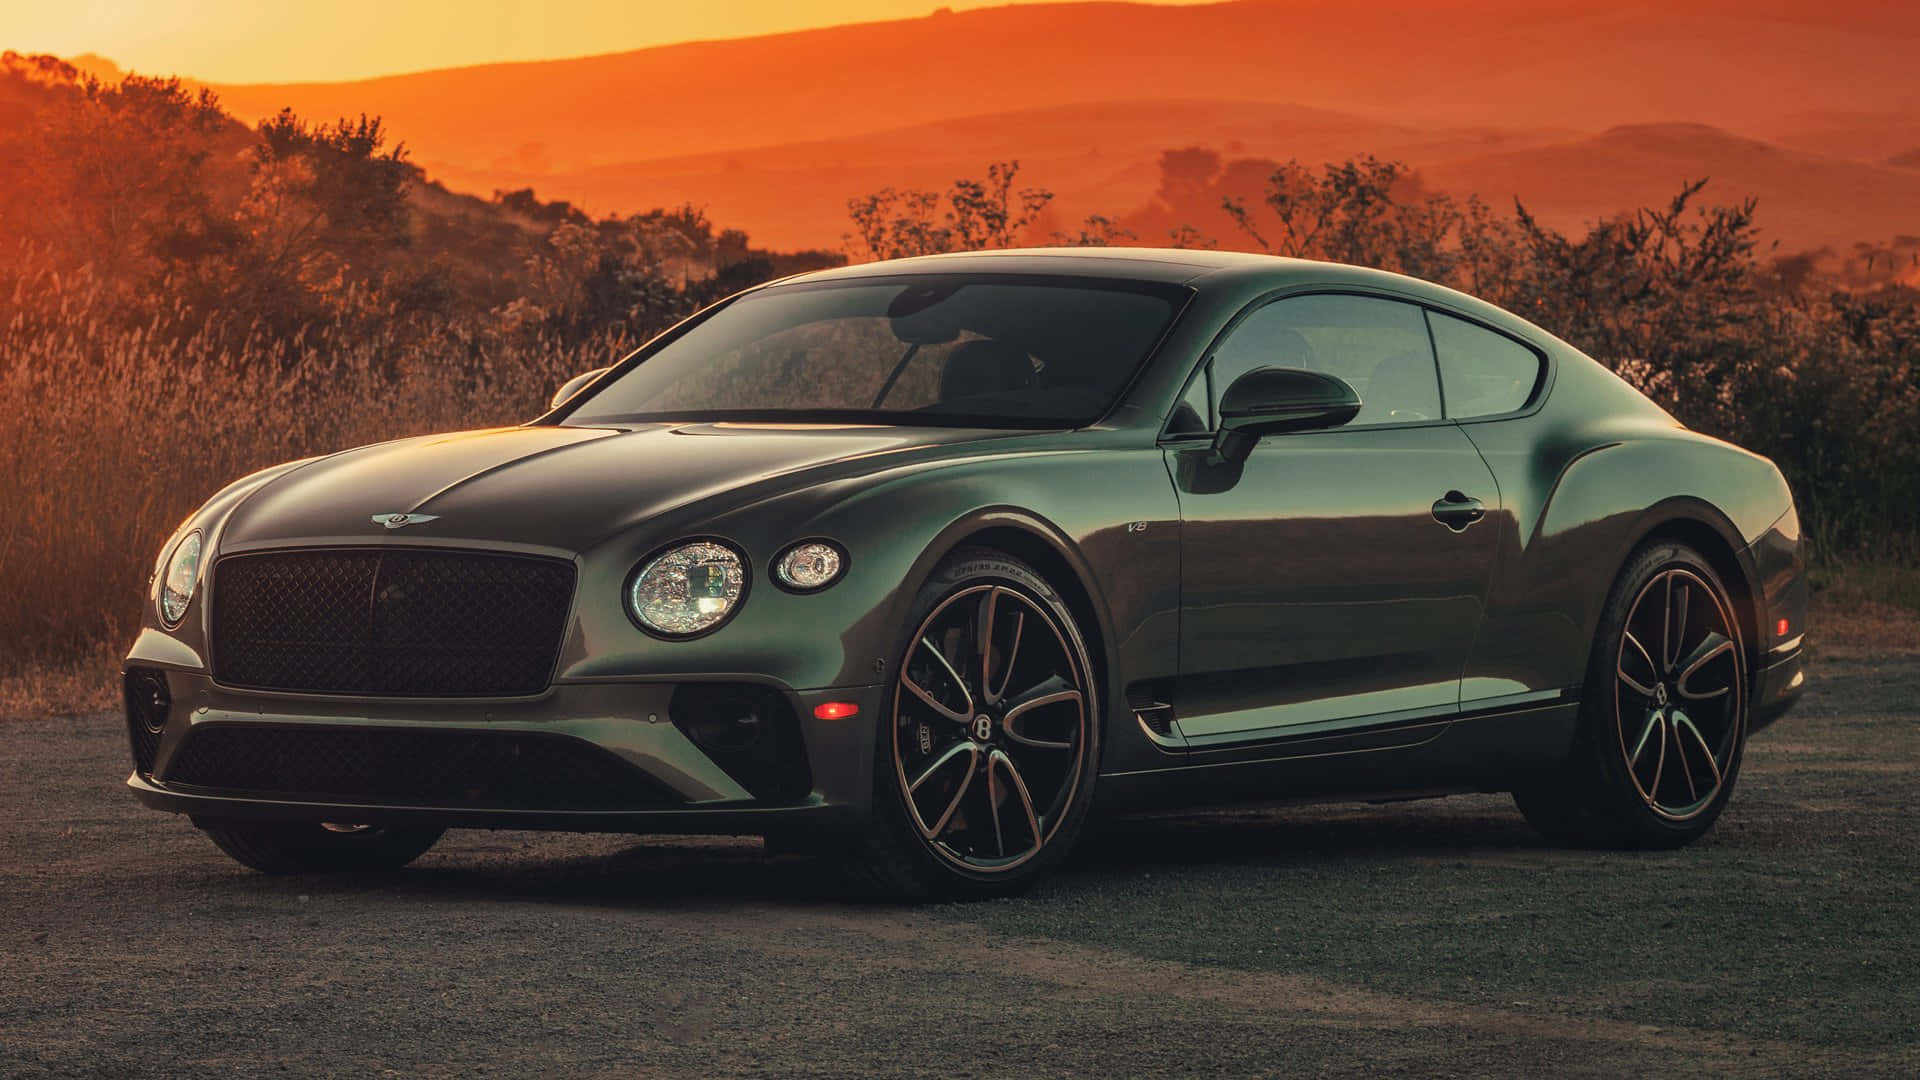 Experience Luxury With Bentley Sport Wallpaper